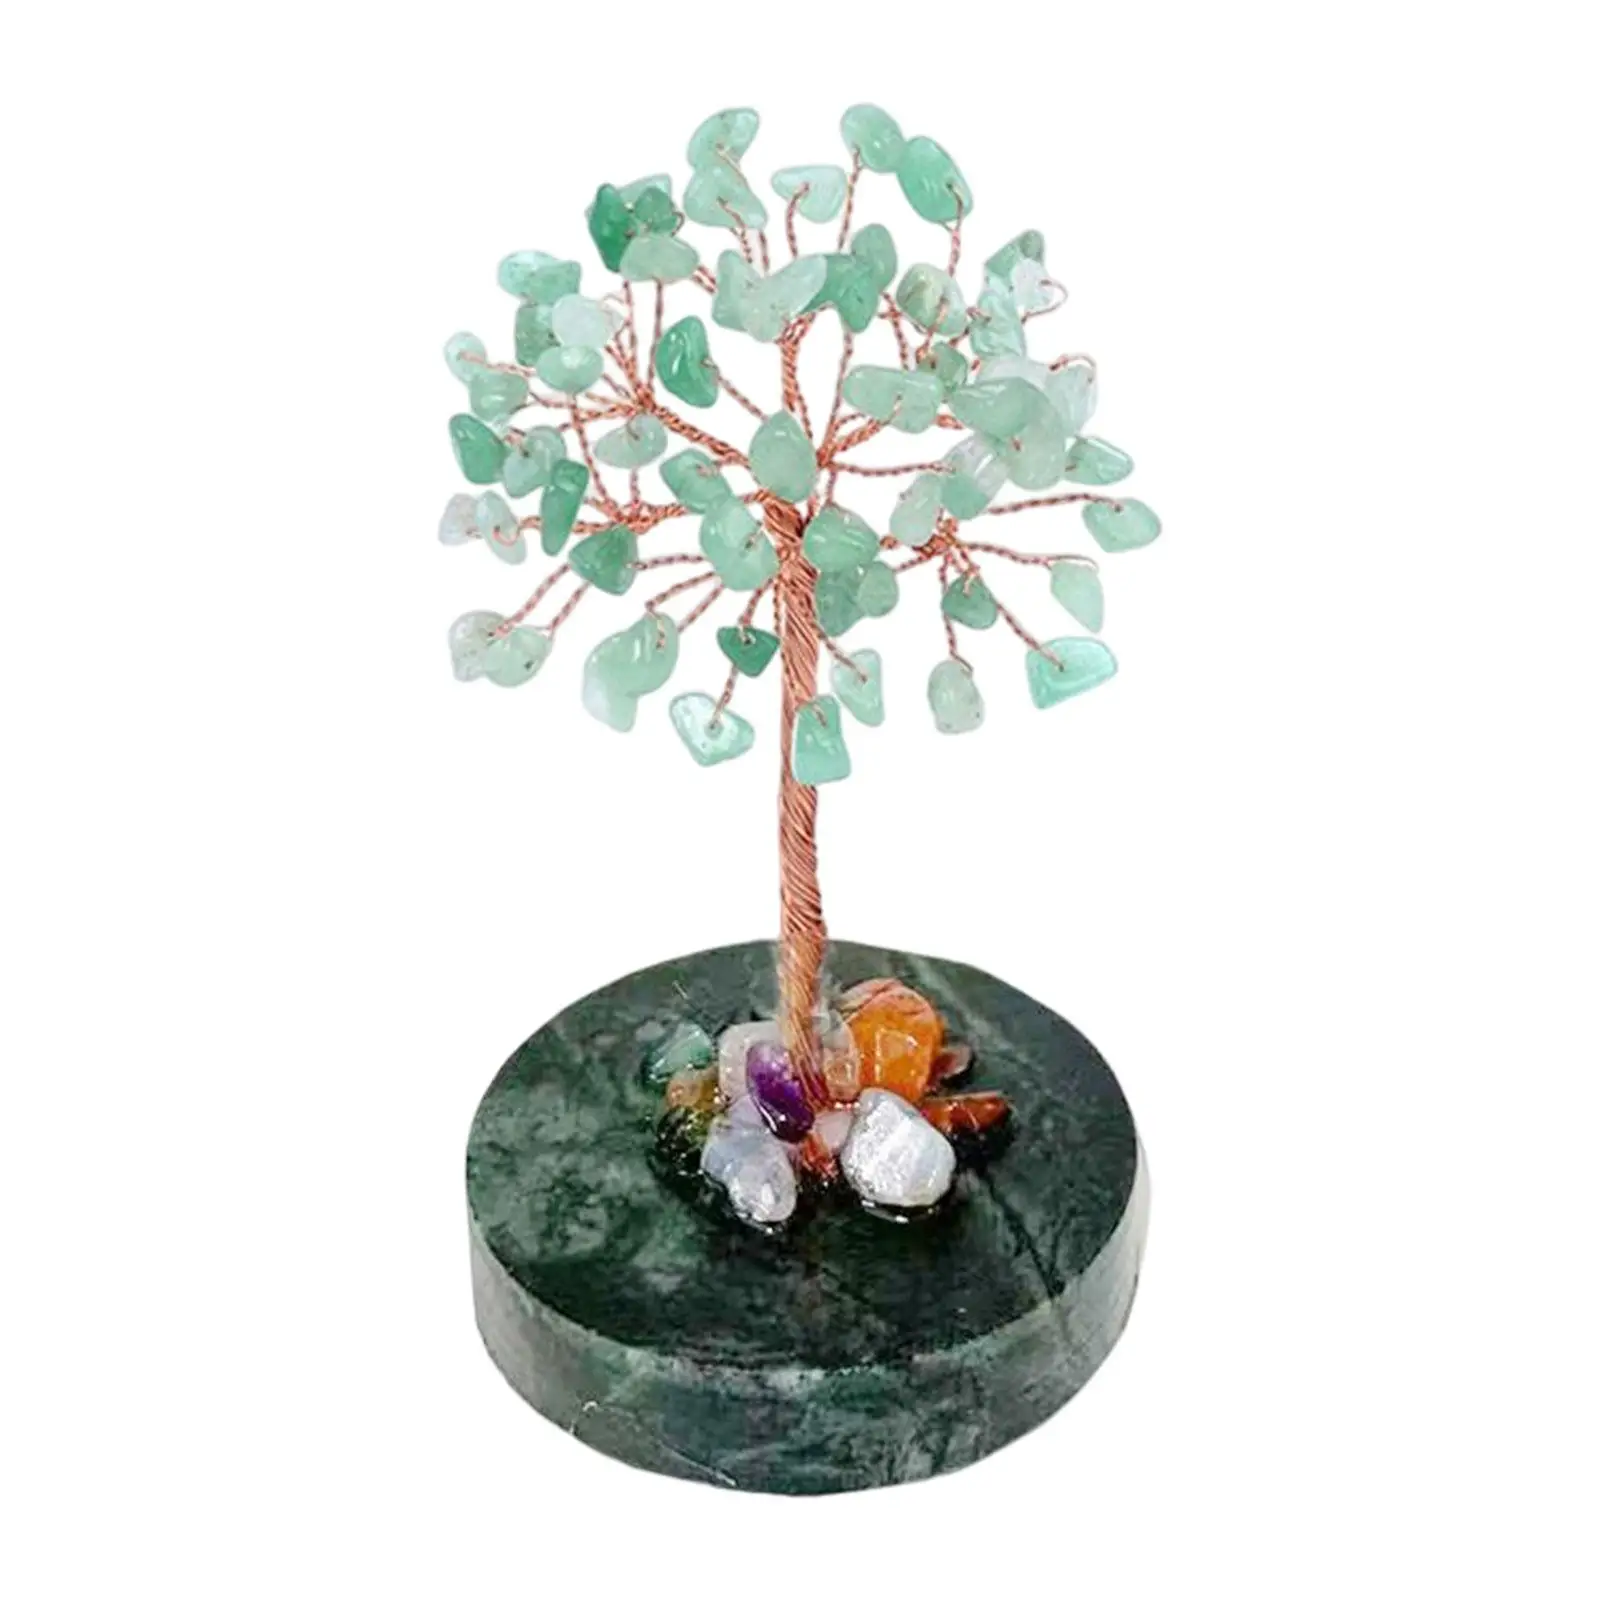 Feng Shui Tree Ornament Desktop Decoration Photo Props Scene Layout Handcraft Art Decor with Base Figurines for Indoor Wedding